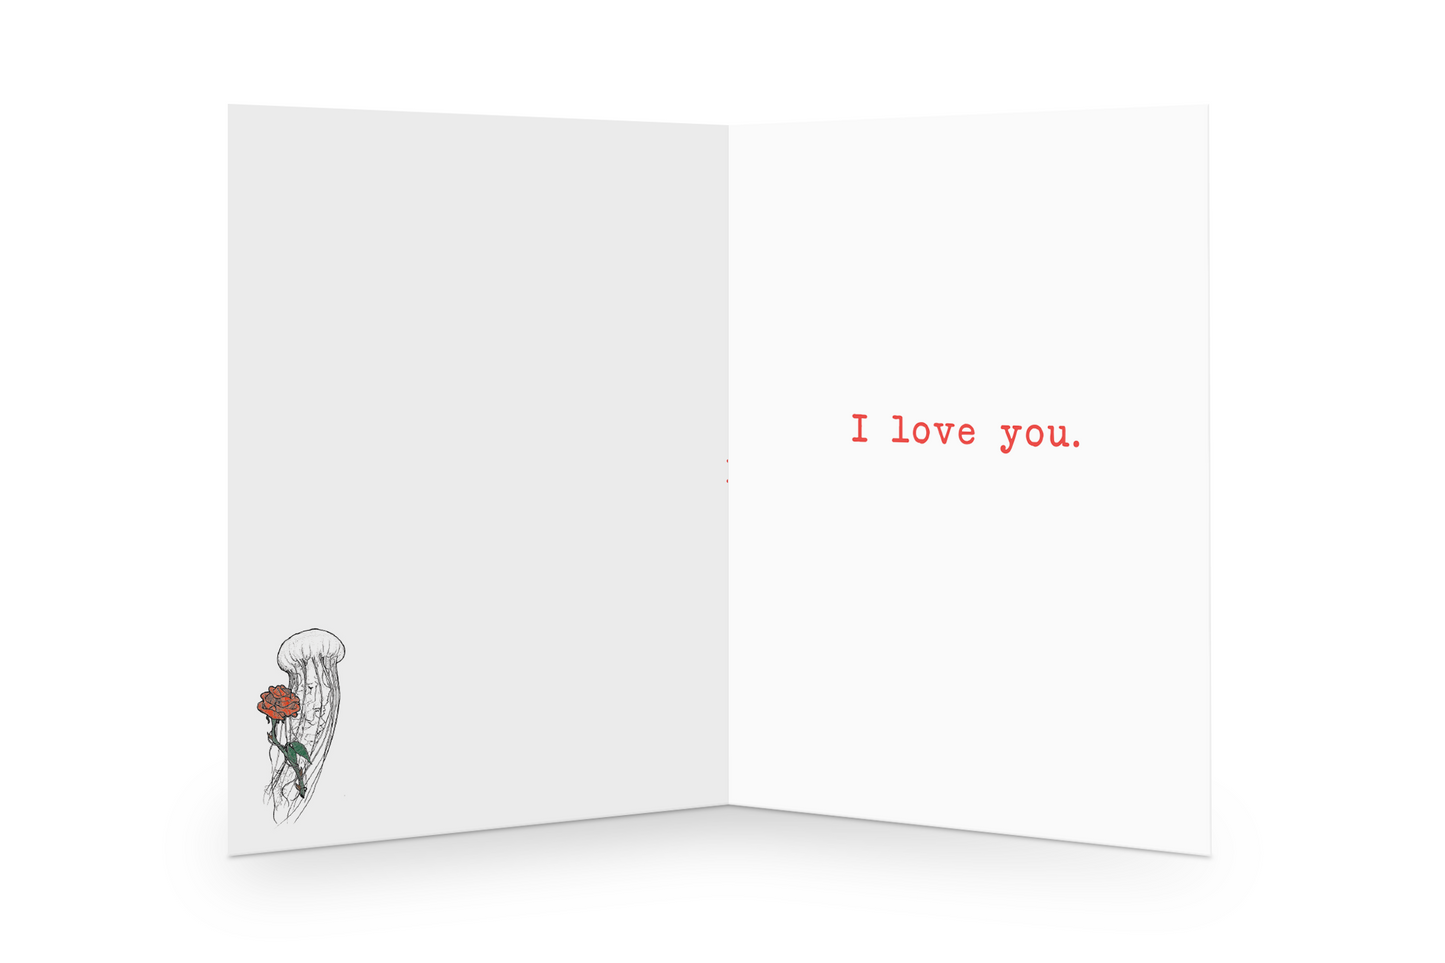 I love you inside greeting card